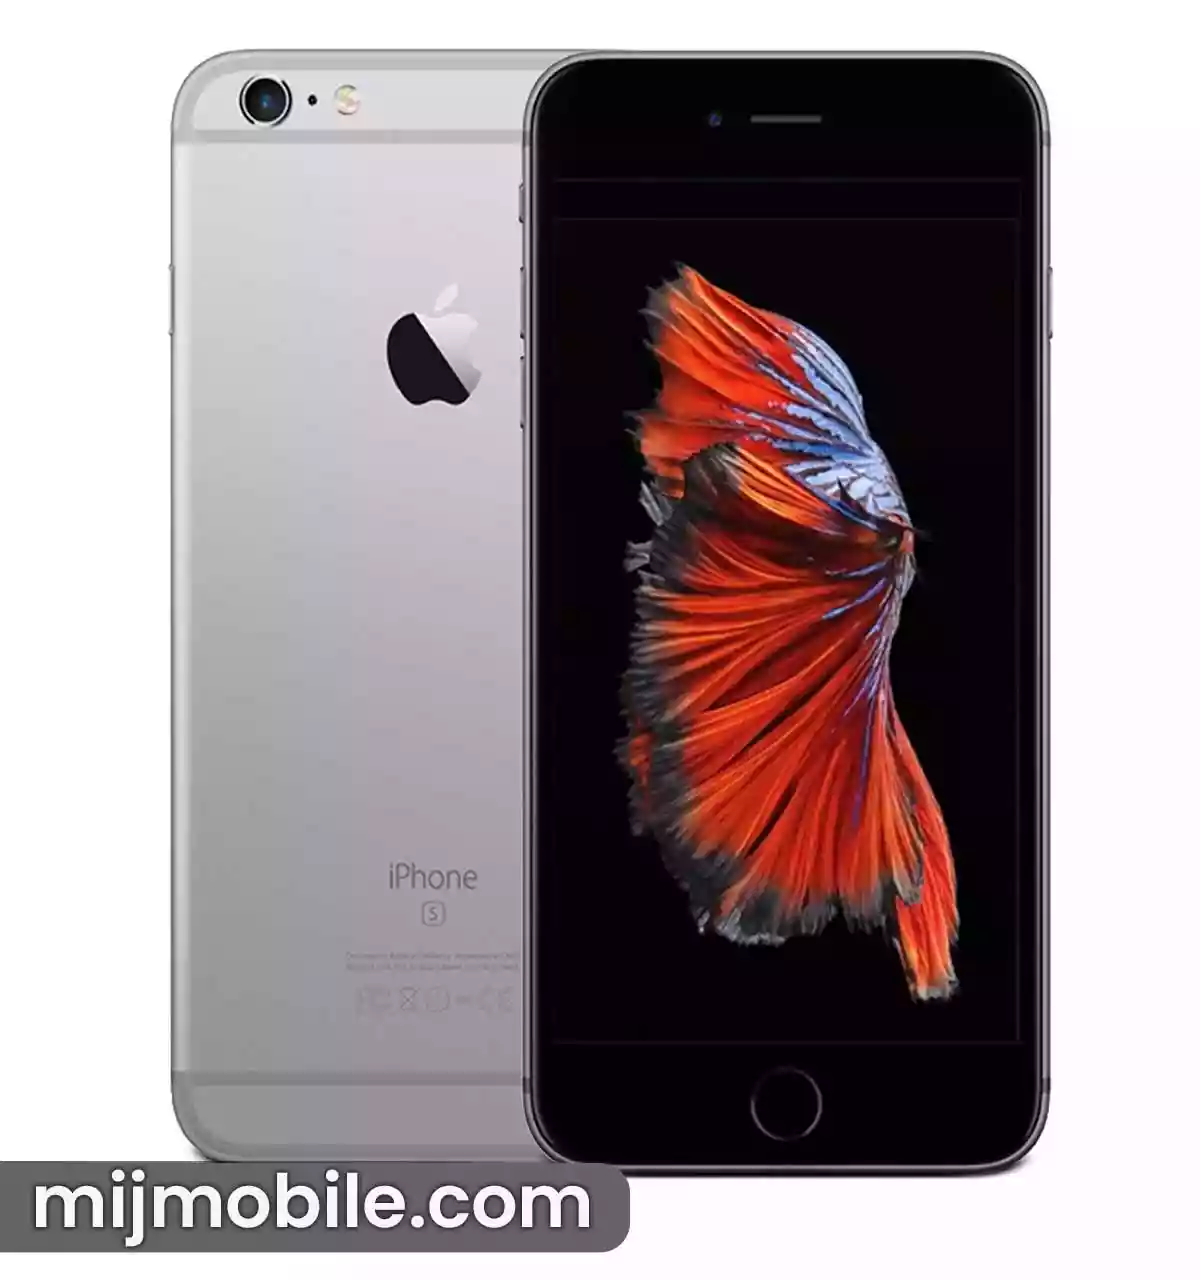 Apple iPhone 6s Price in Pakistan